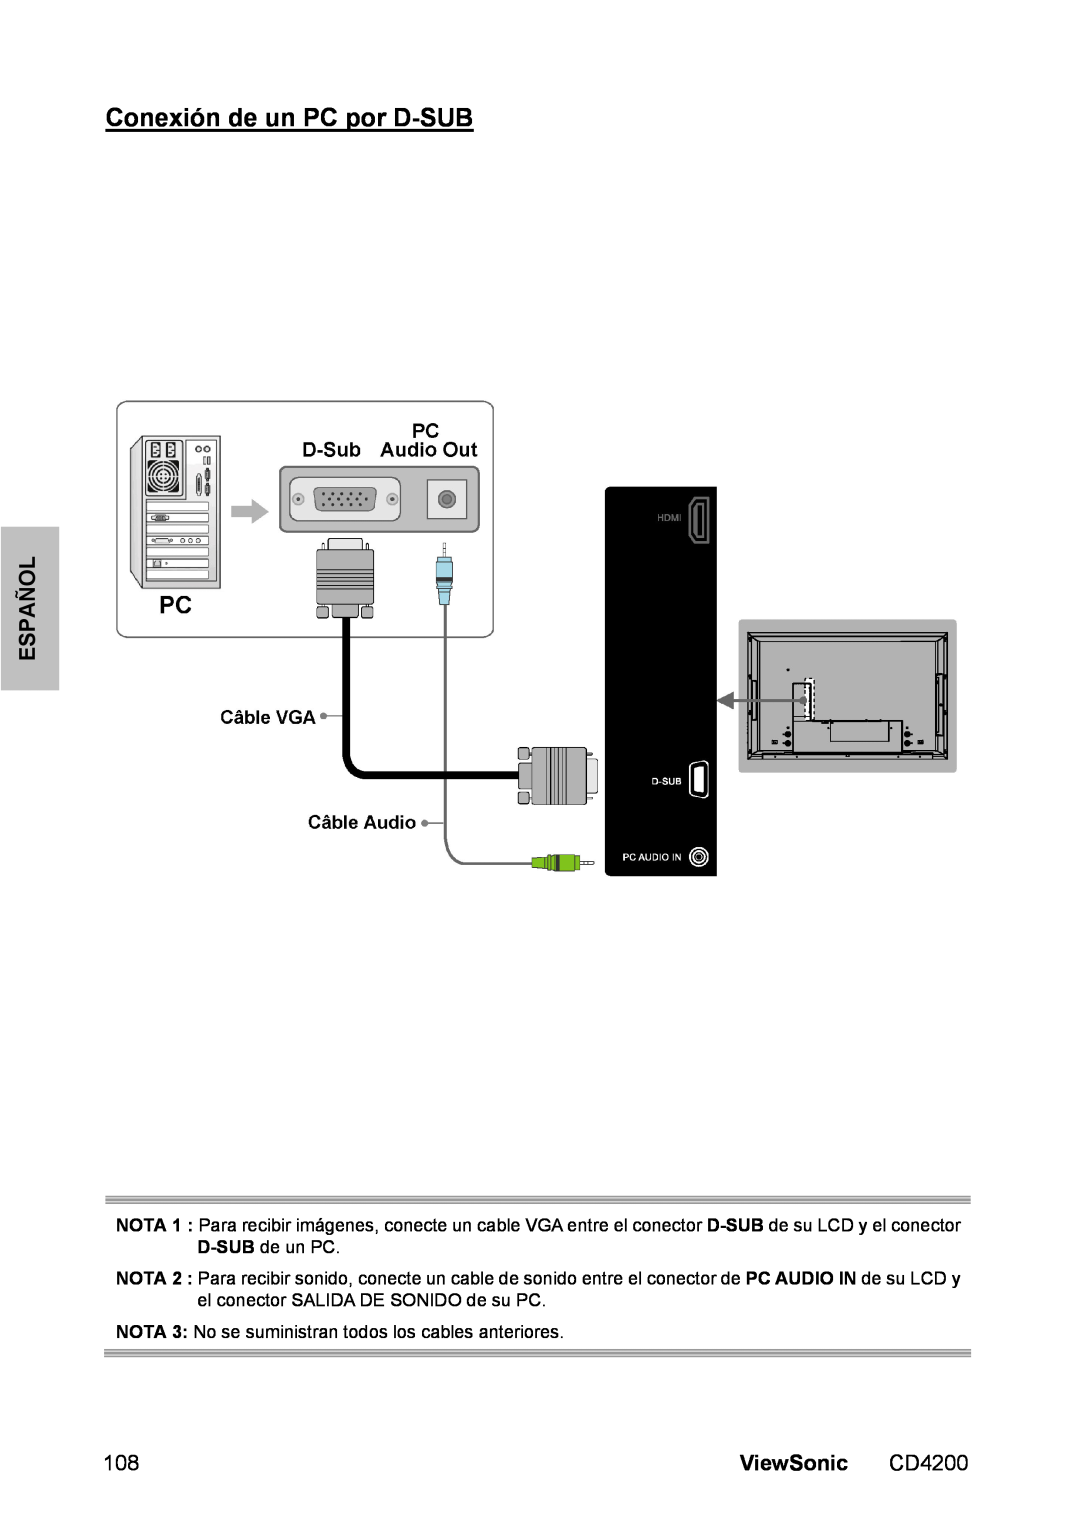 ViewSonic CD4200 manual Conexión de un PC por D-SUB, Español, ViewSonic 